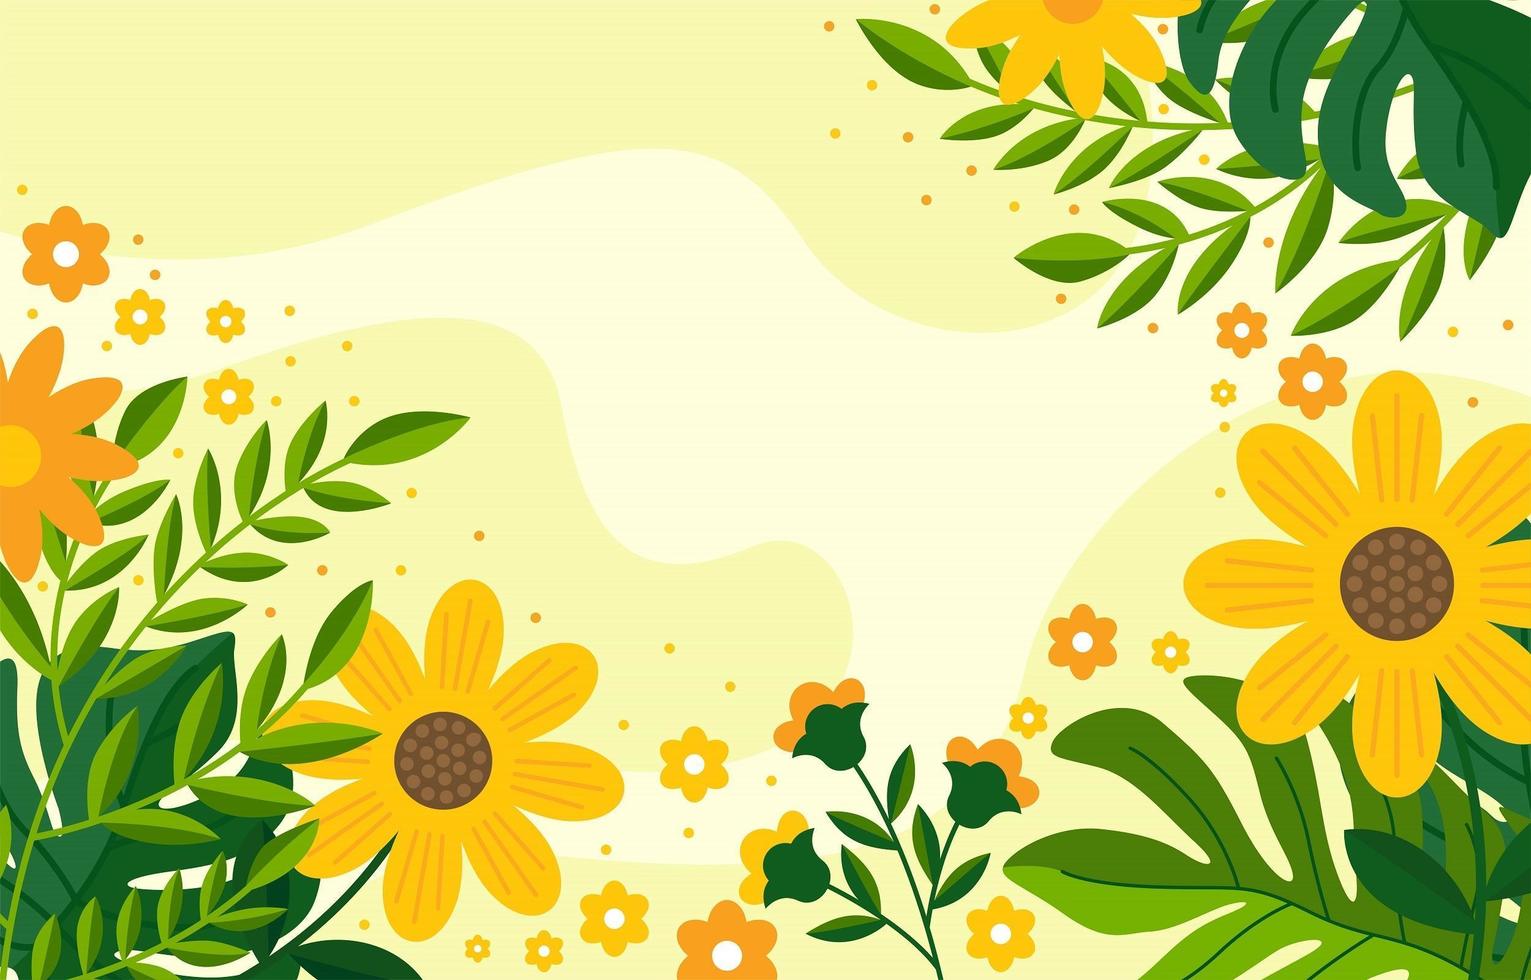 Spring Flower Background vector